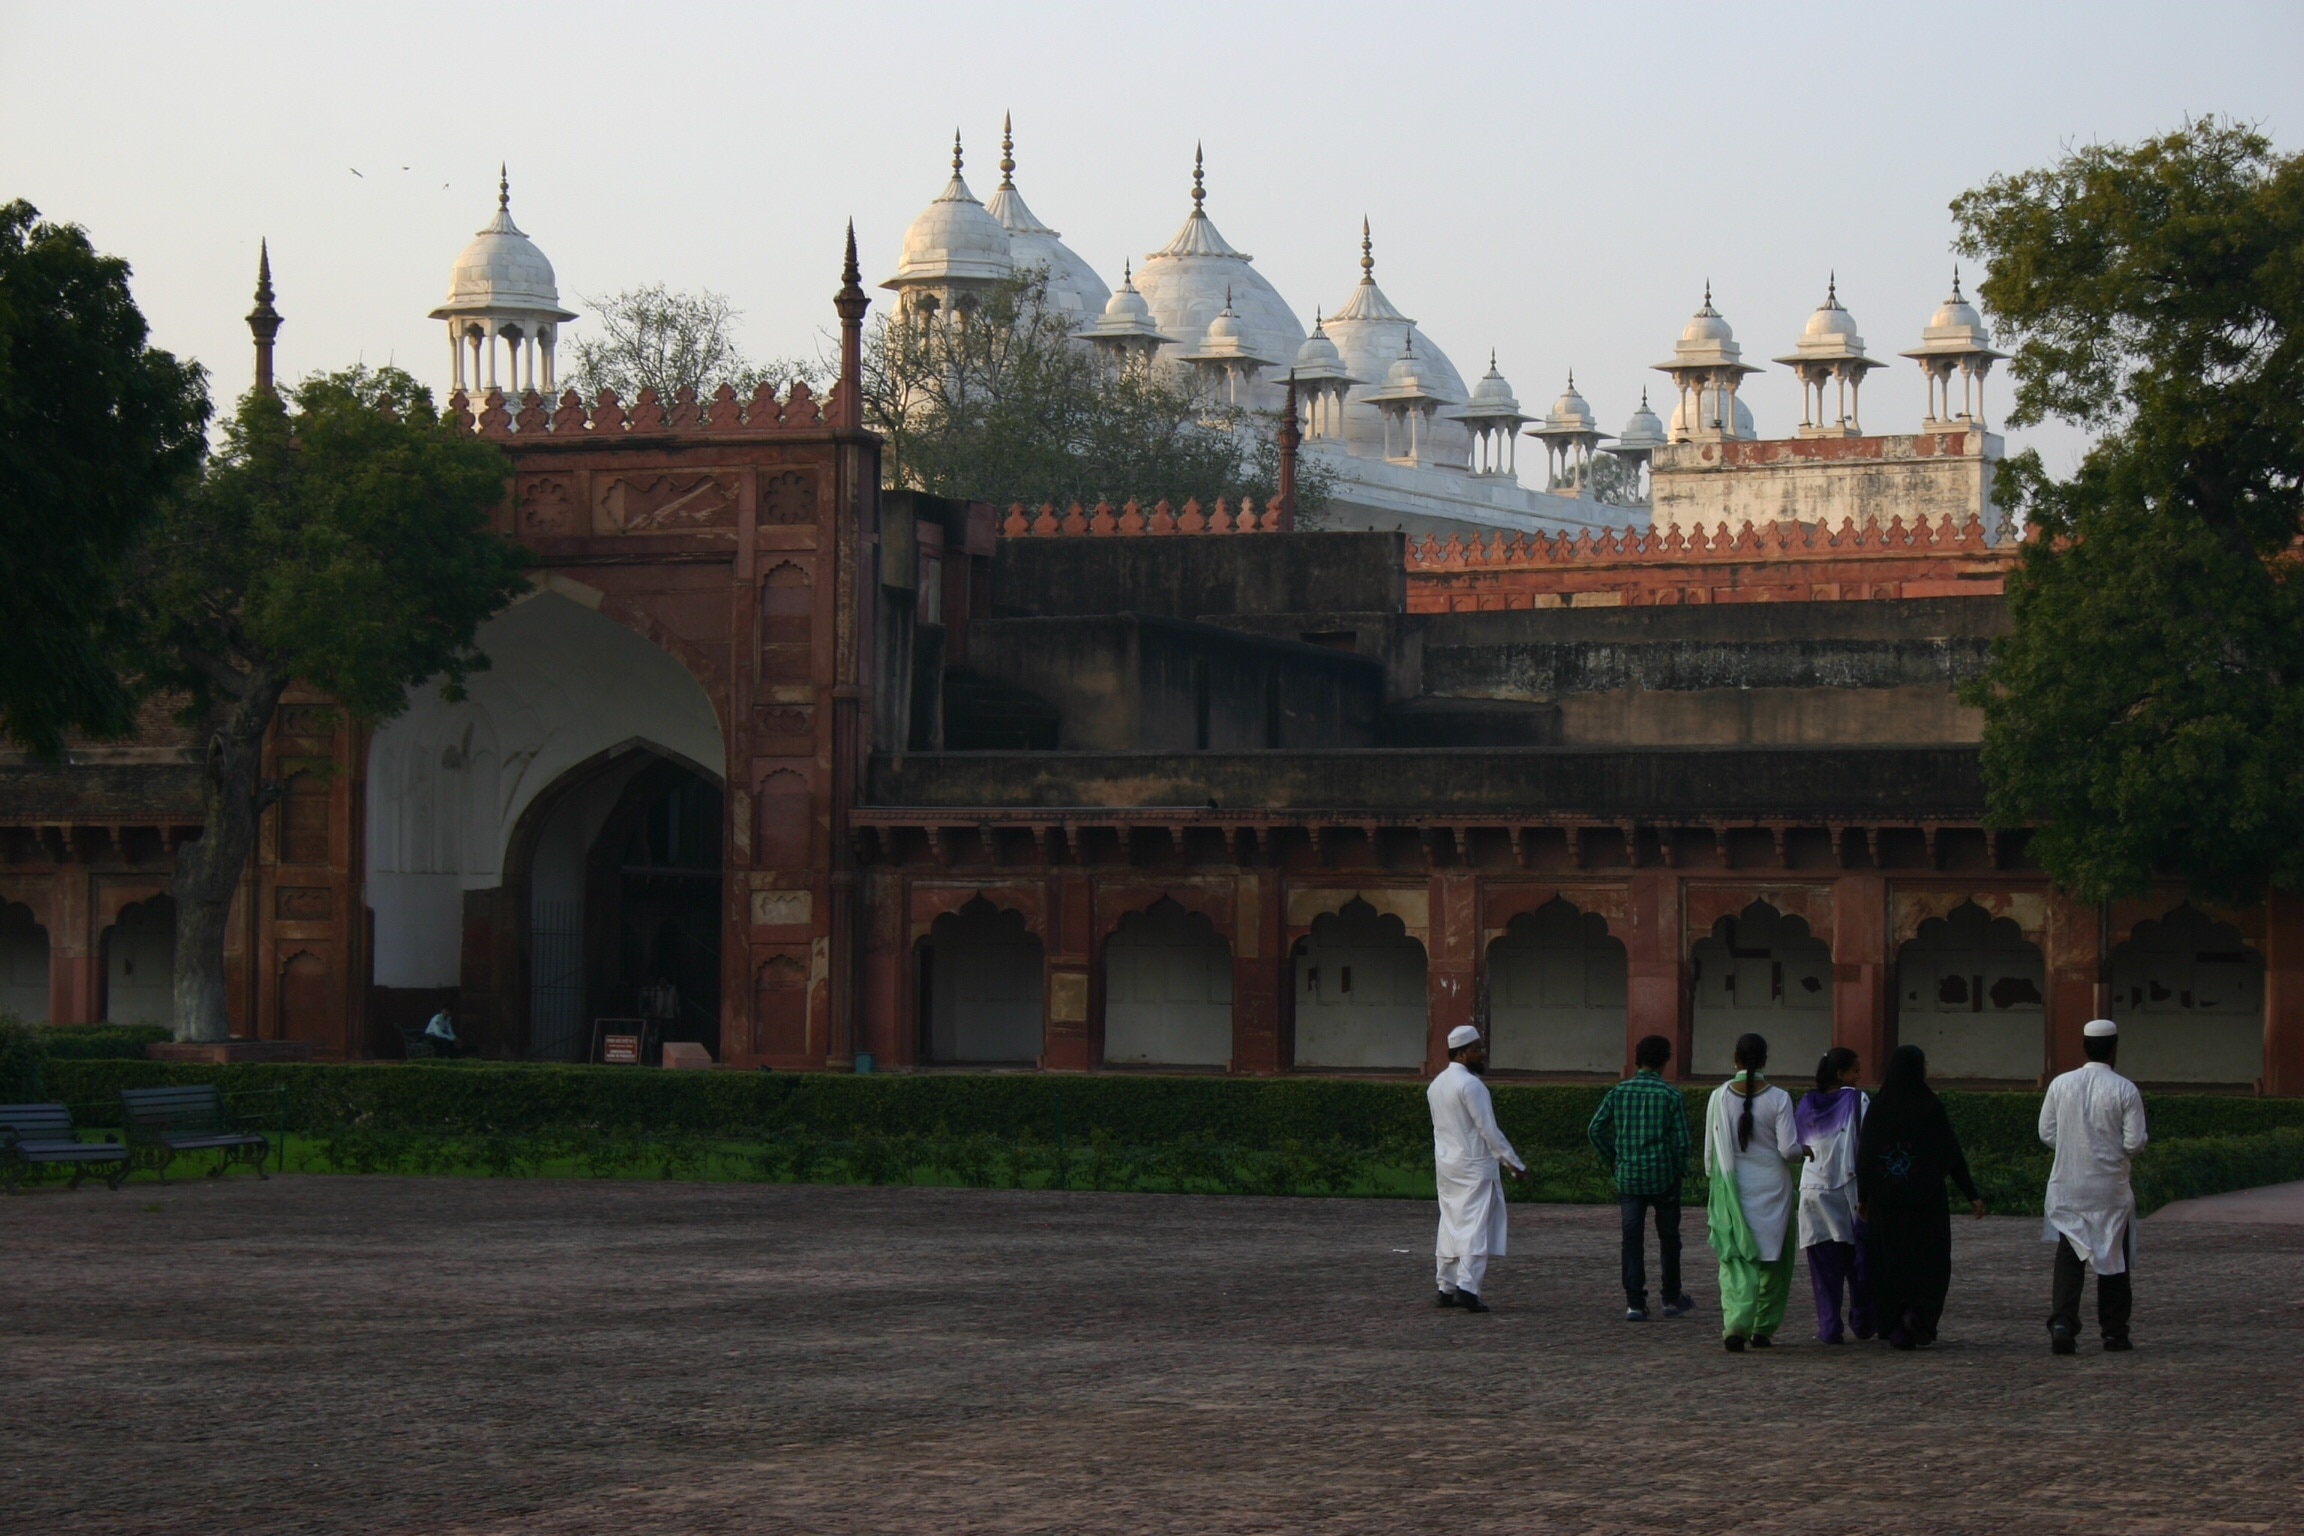 One of the entrances to the Taj